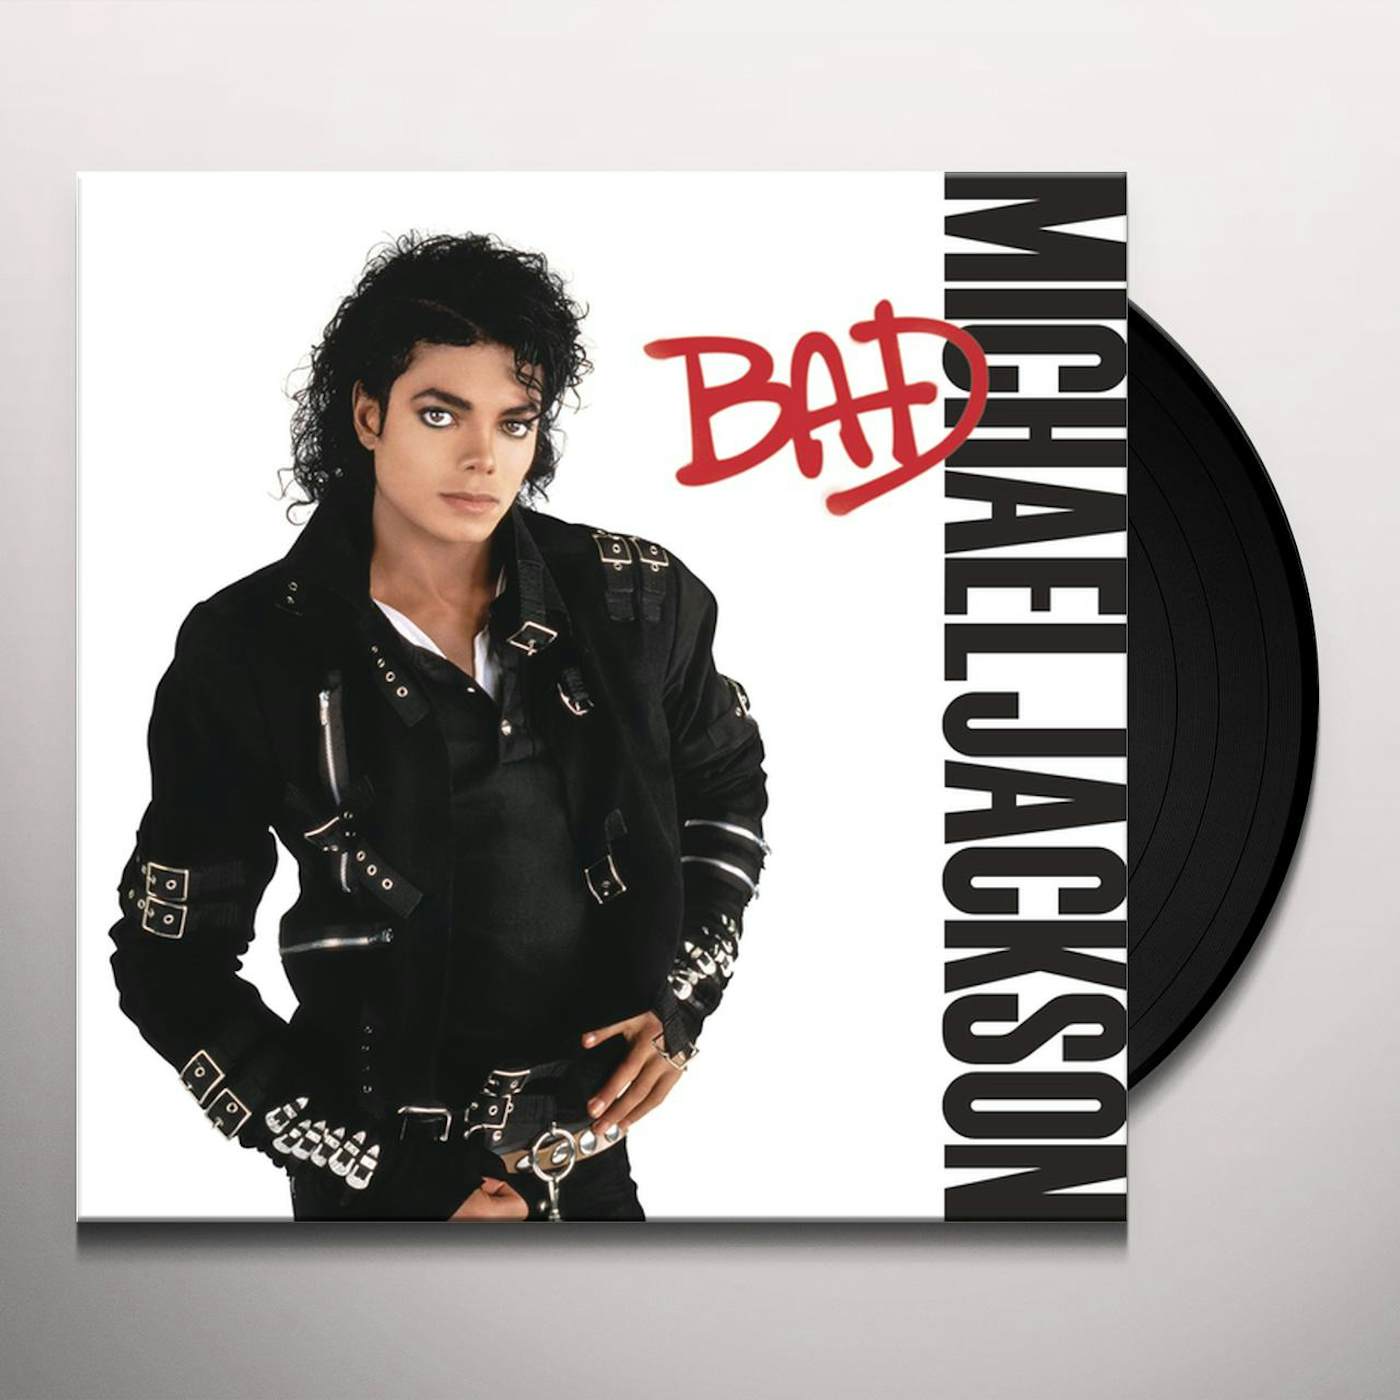 Bad - Michael Jackson Official Site